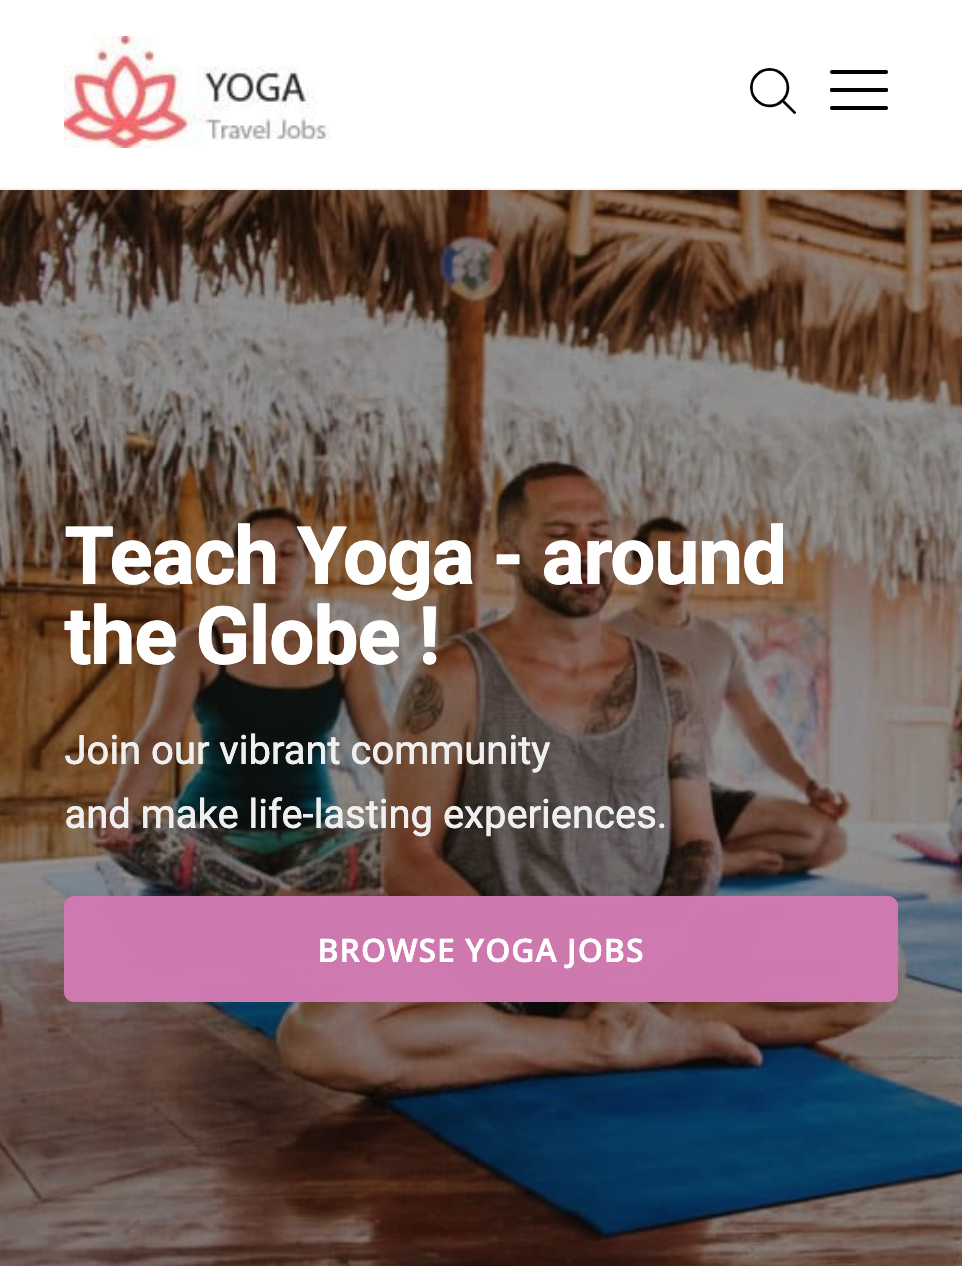 Yoga Travel Jobs